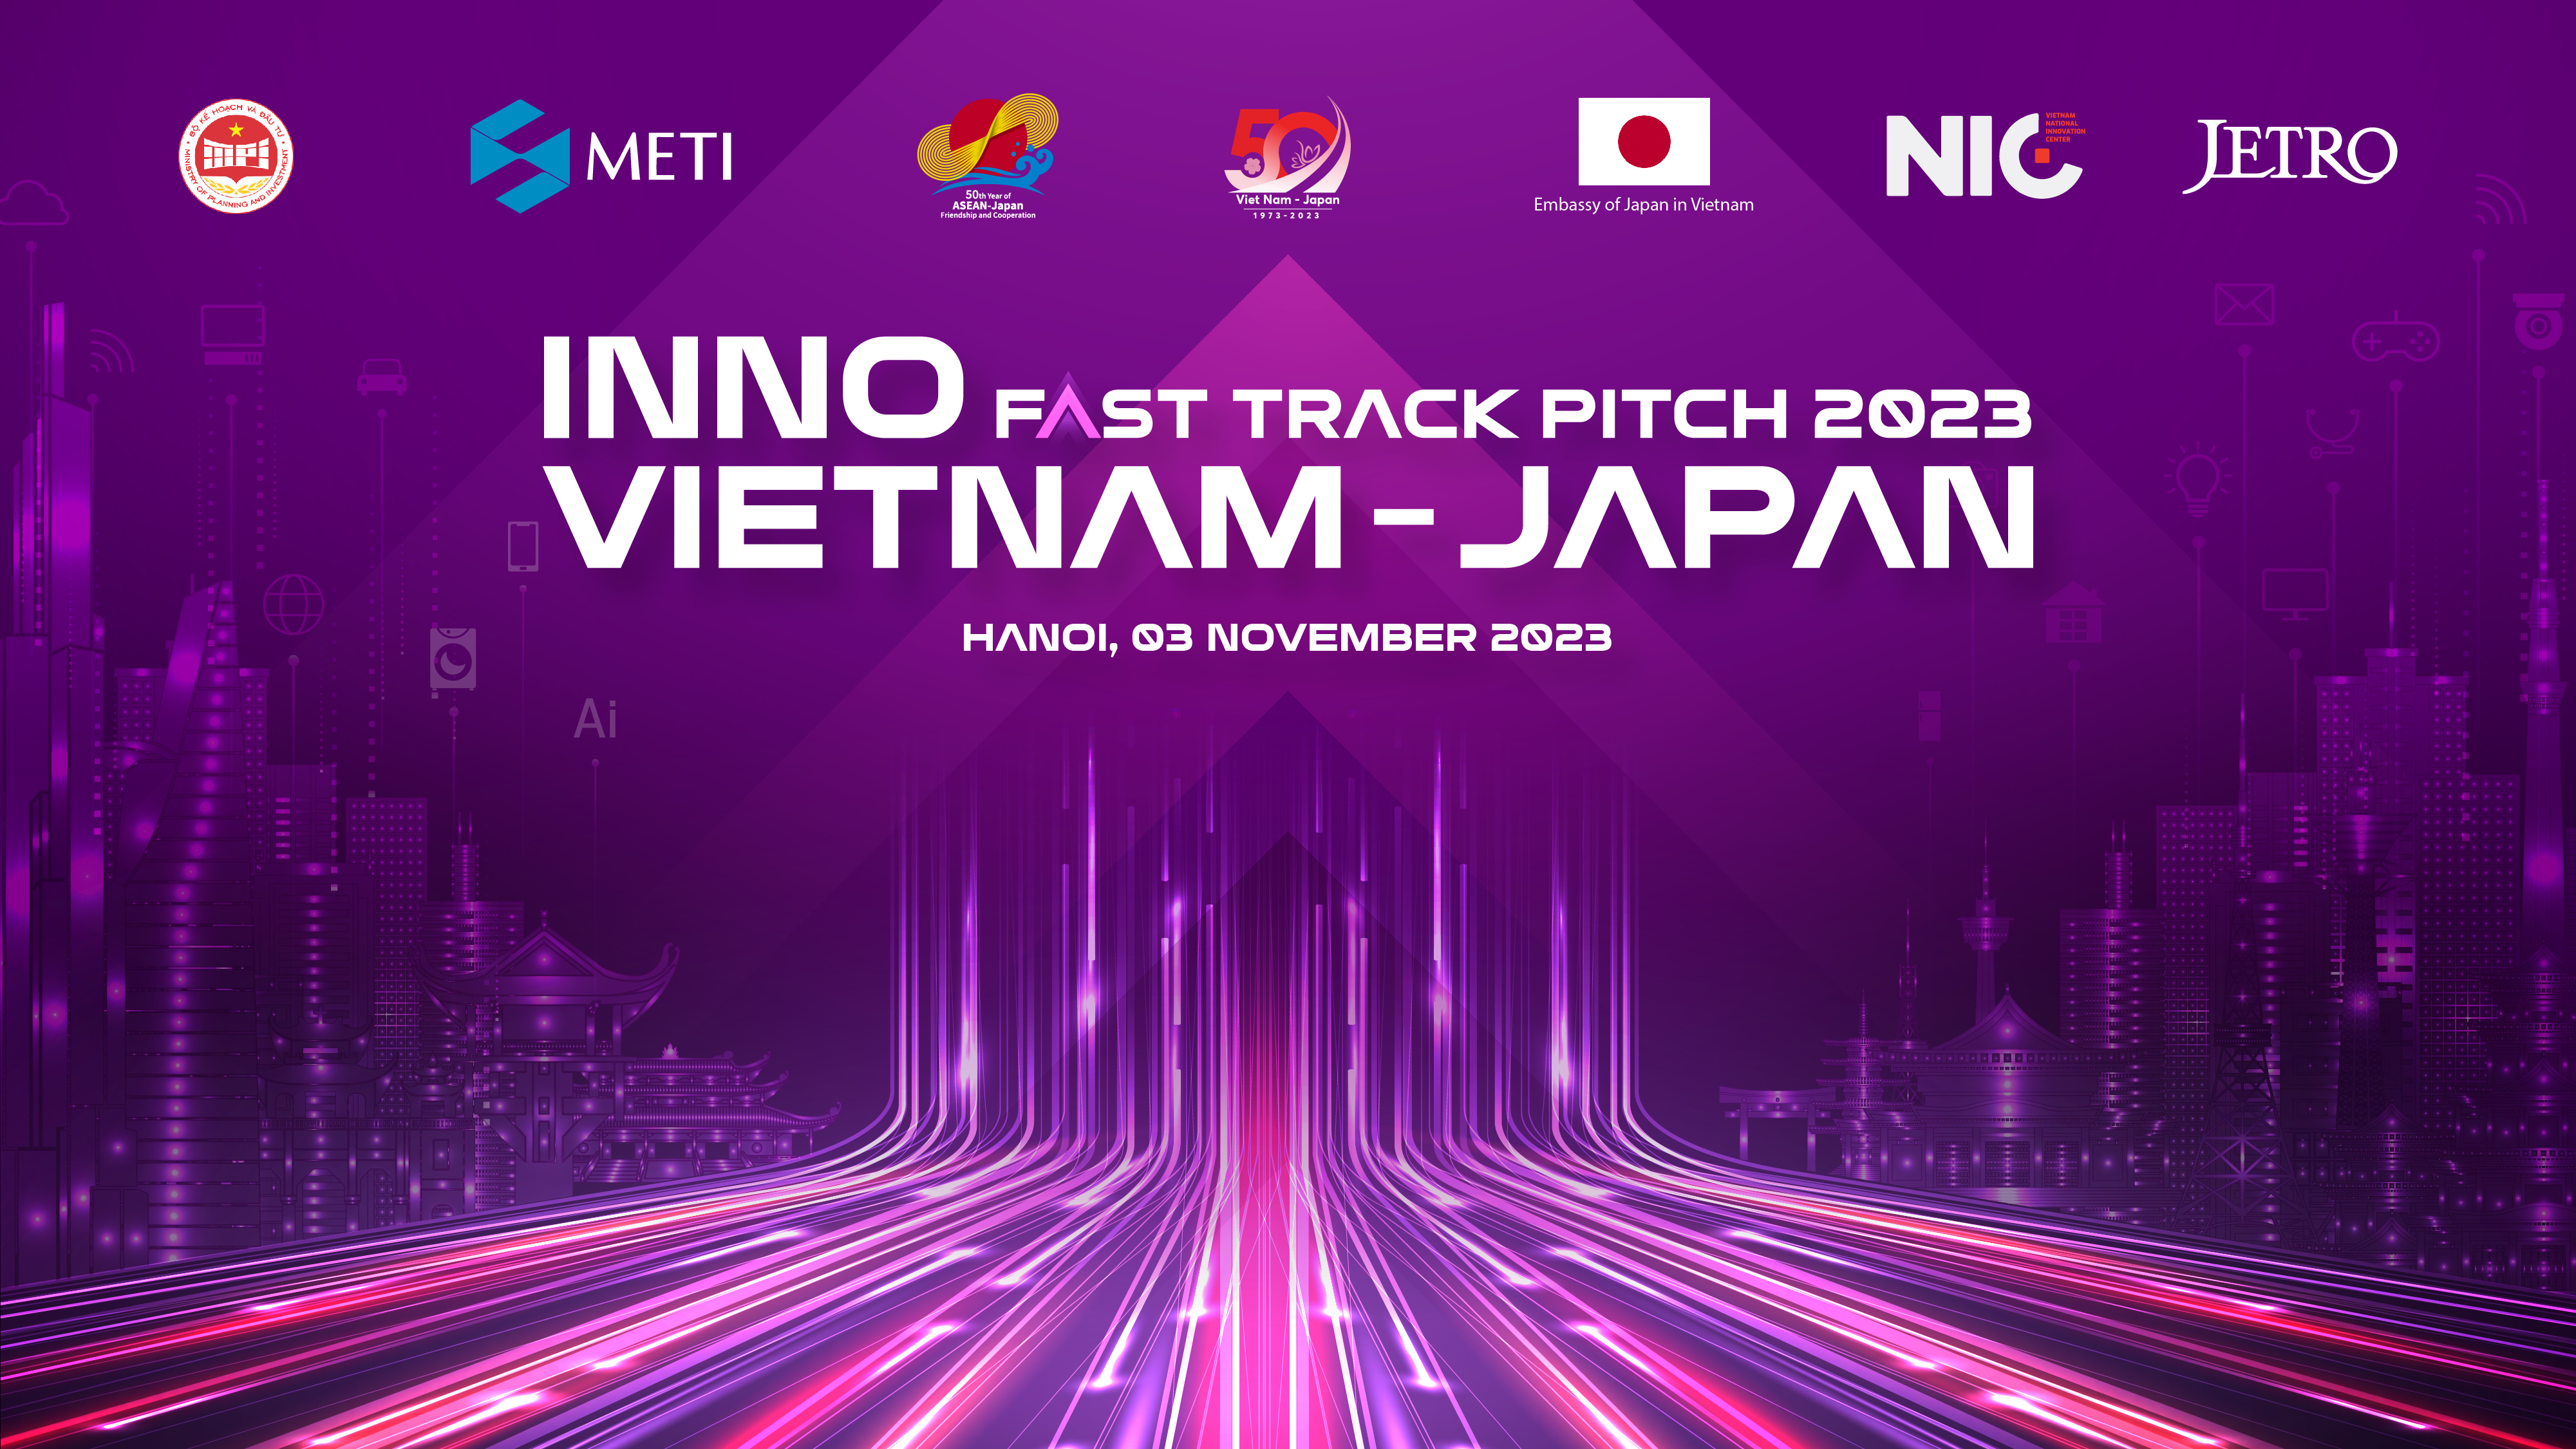 Inno Vietnam-Japan Fast Track Pitch Event 2023